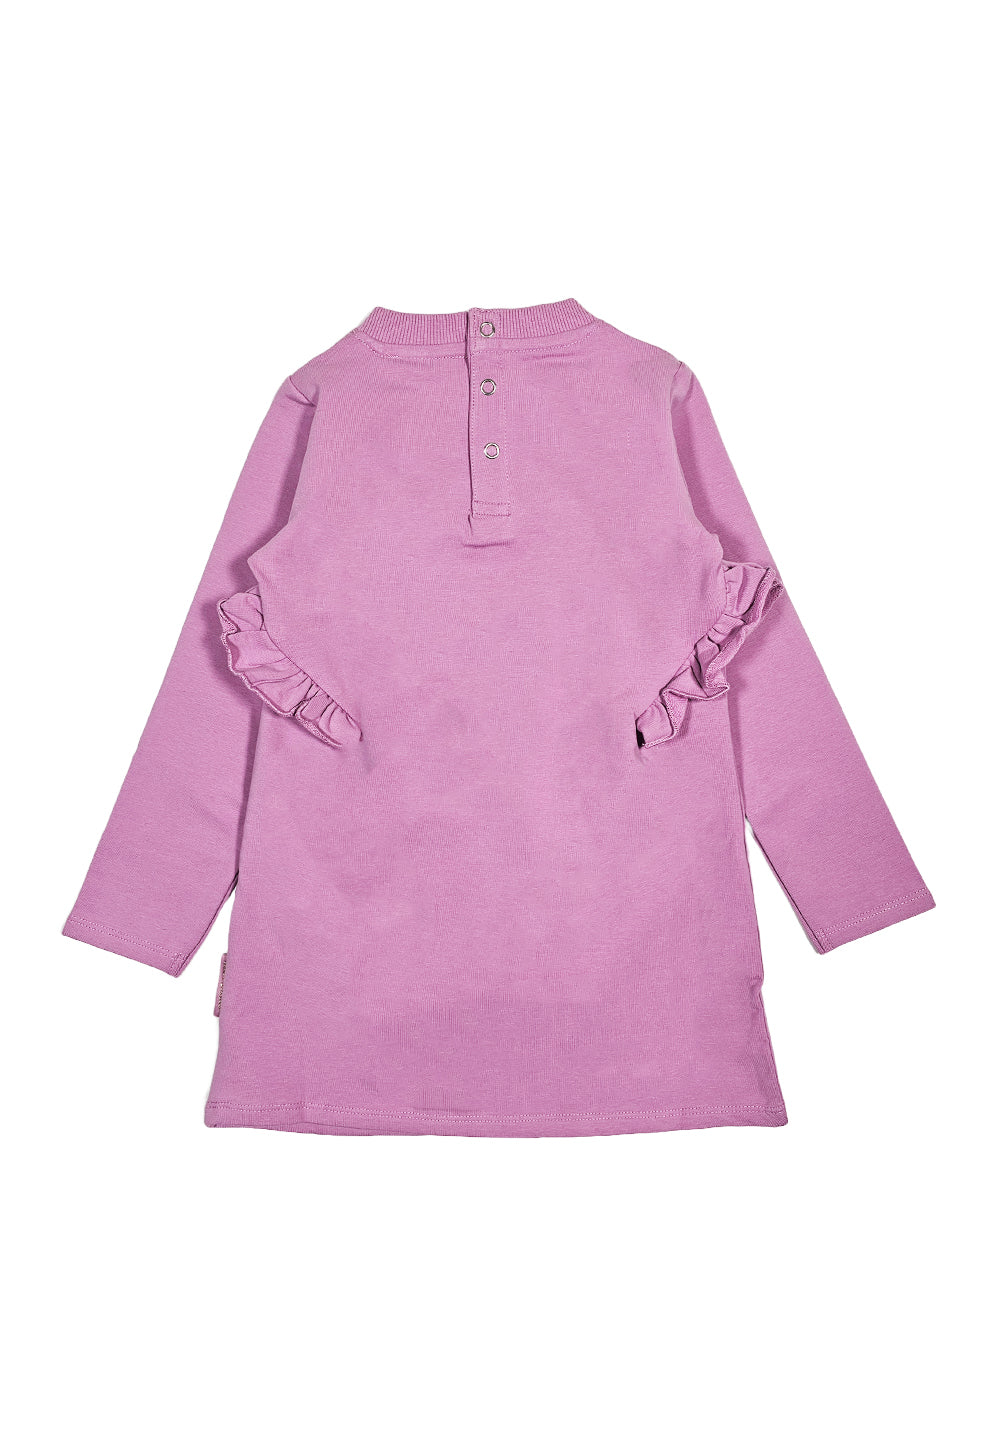 Lilac sweatshirt dress for girls